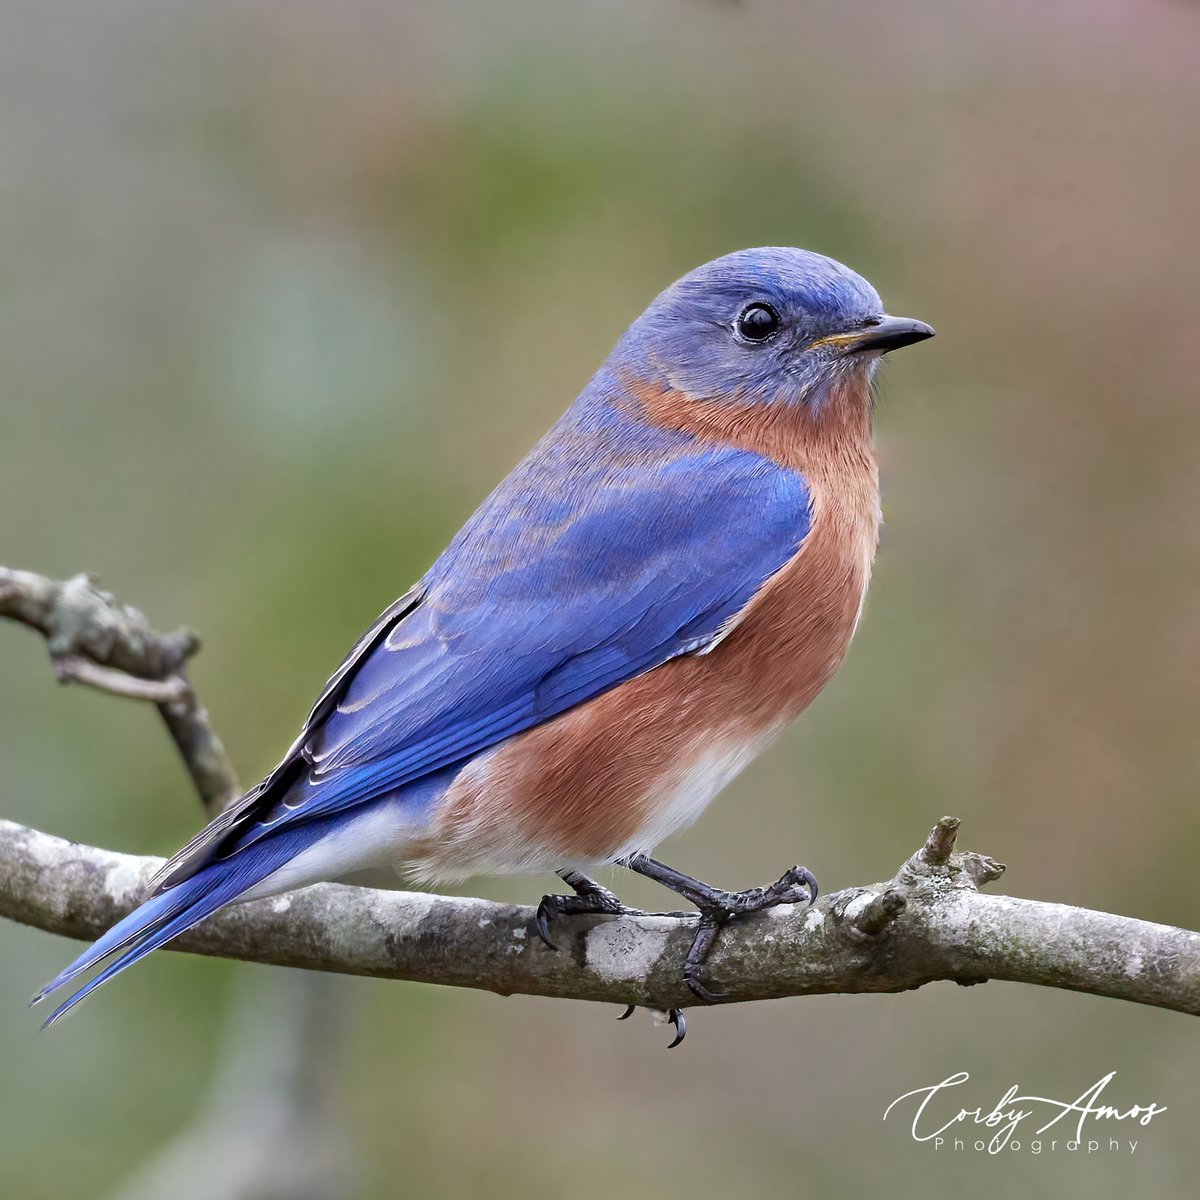 Eastern Bluebird
.
linktr.ee/corbyamos
.
#birdphotography #birdwatching #birding #BirdTwitter #twitterbirds #birdpics